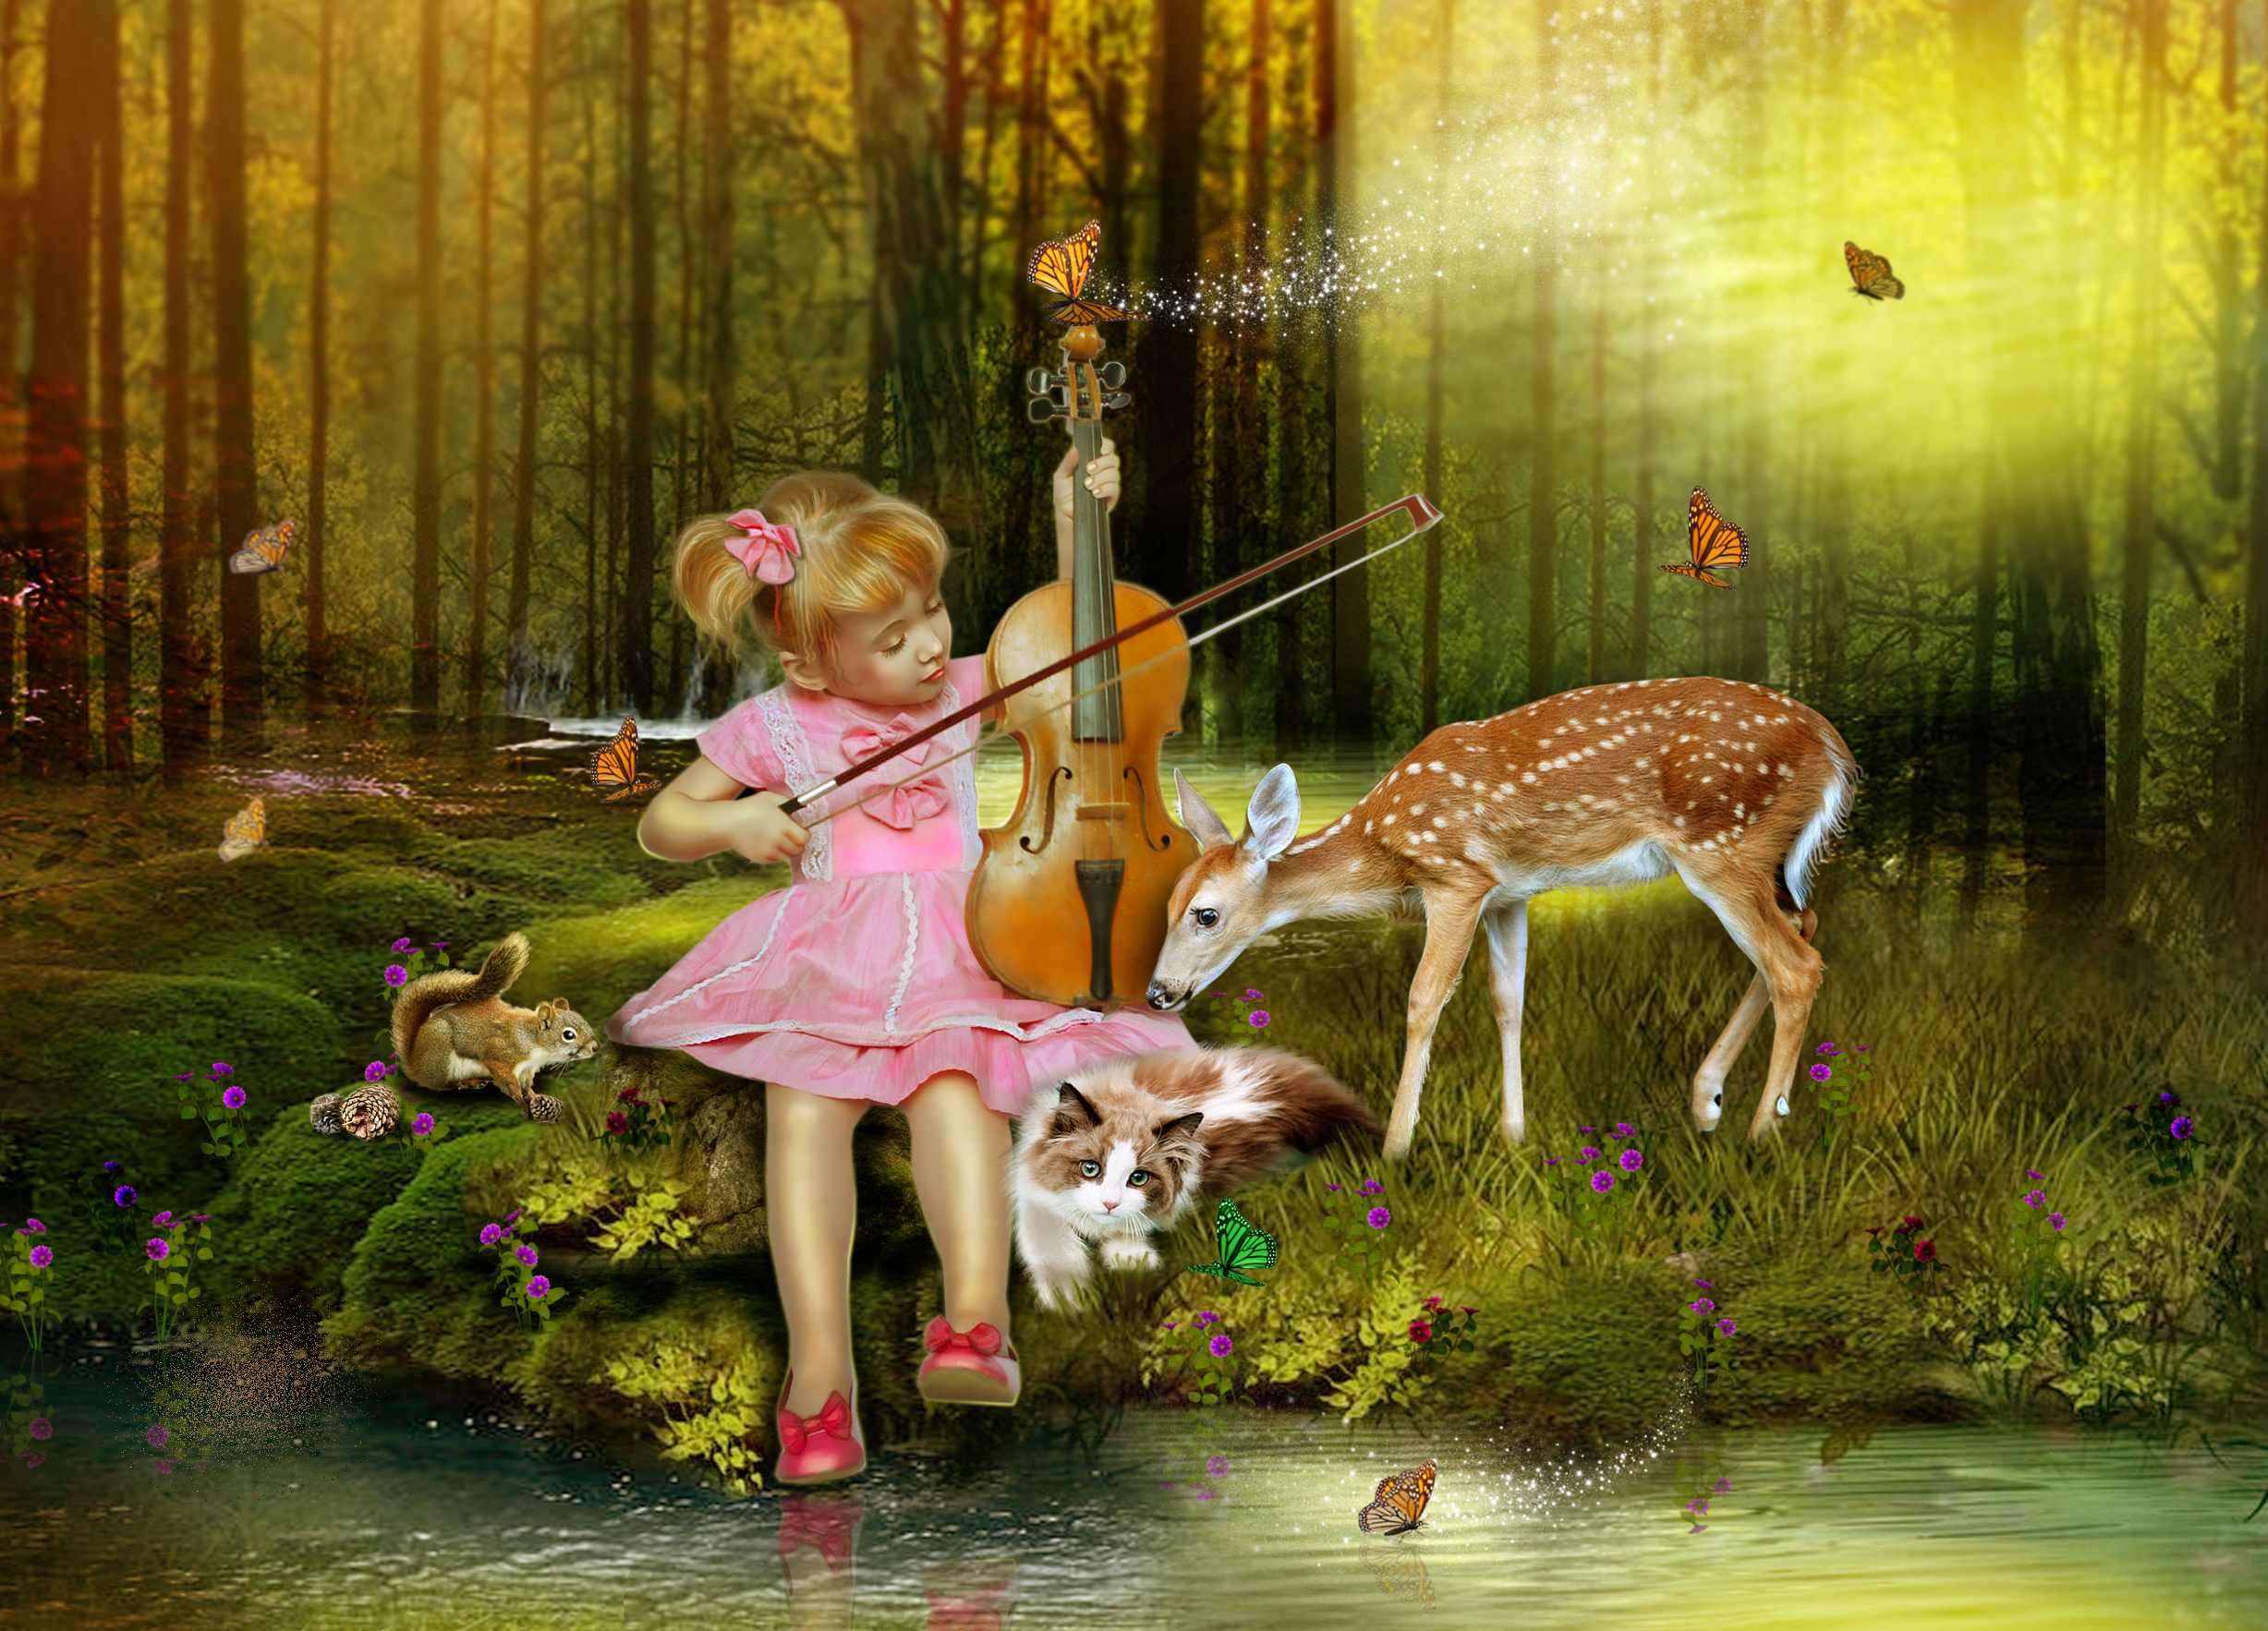 Little Girl in Fantasy Forest by roserika